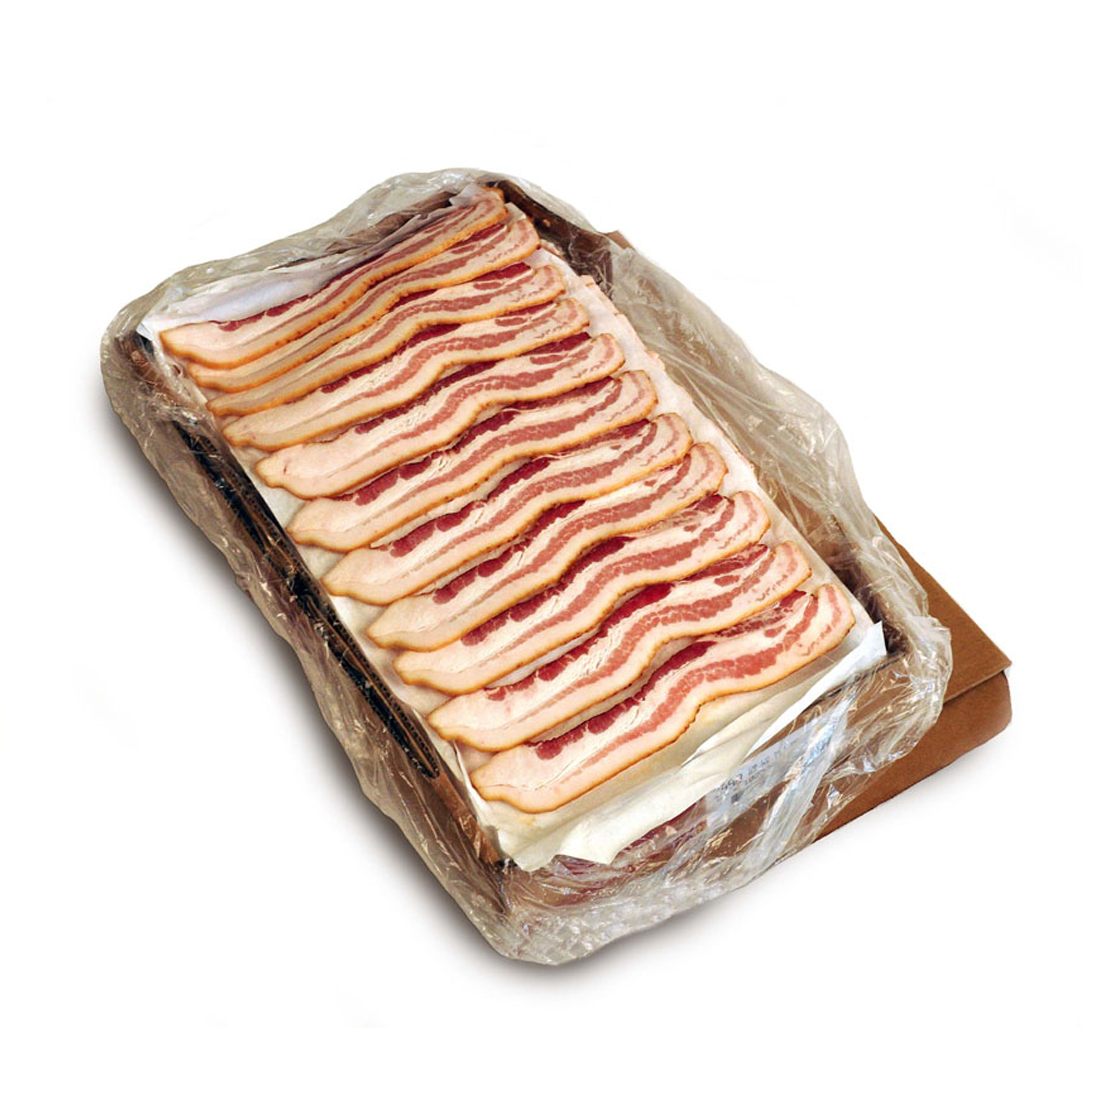 Hatfield 14-18 Sliced Layout Style Bacon